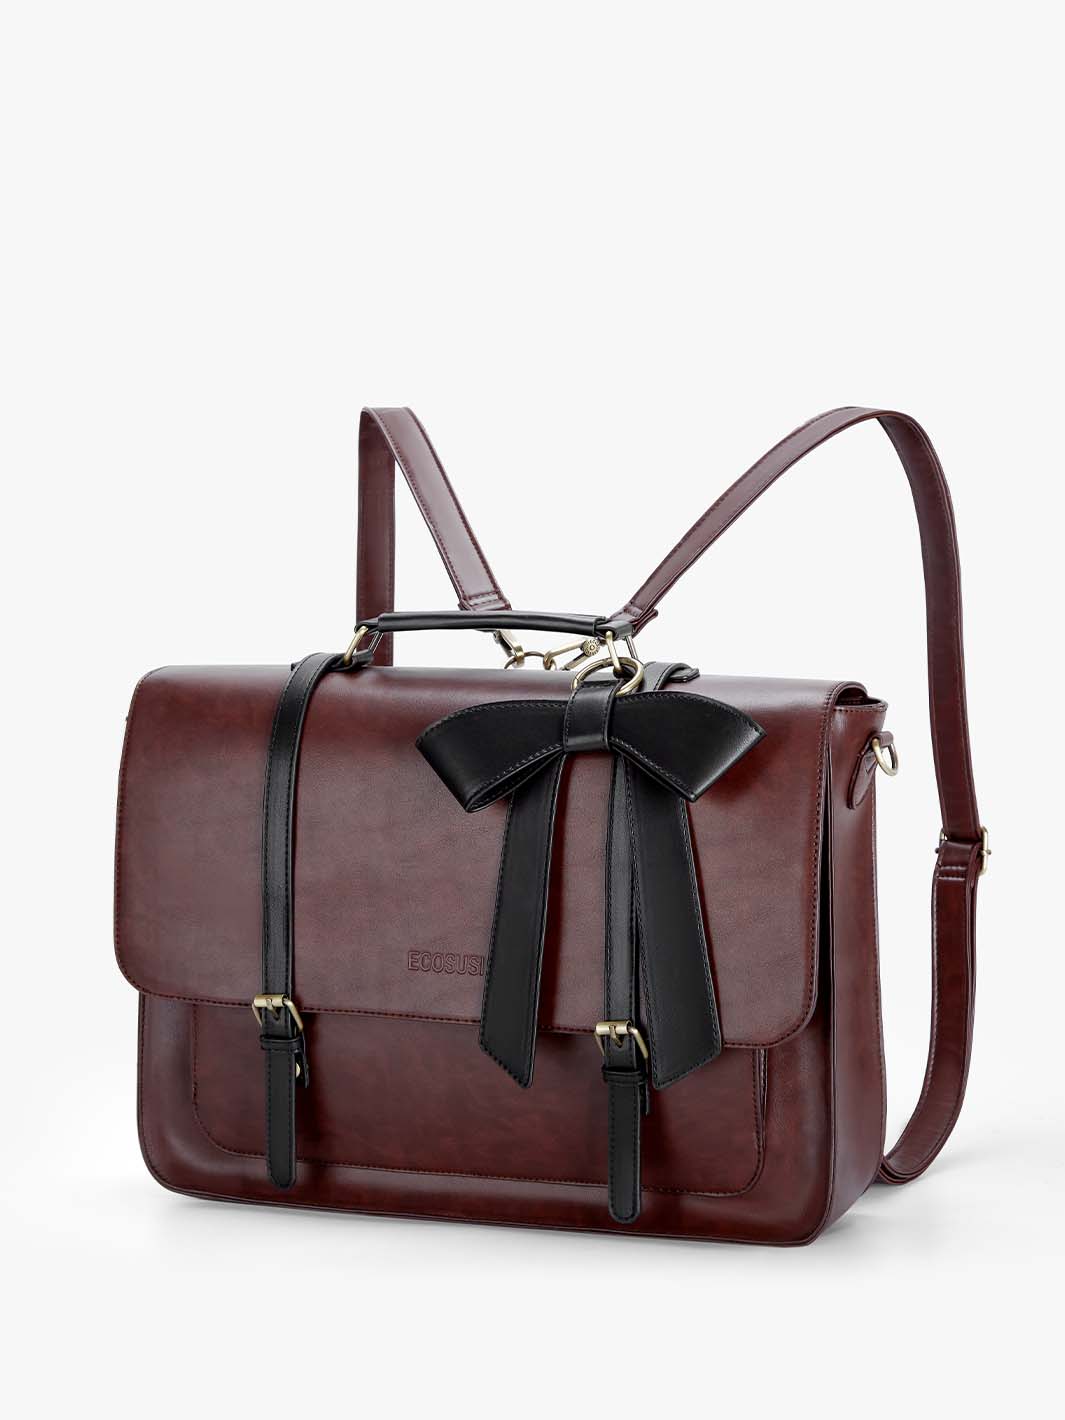 Vintage Leather Briefcase & Laptop Bag - Ecosusi Classic Bow Bag